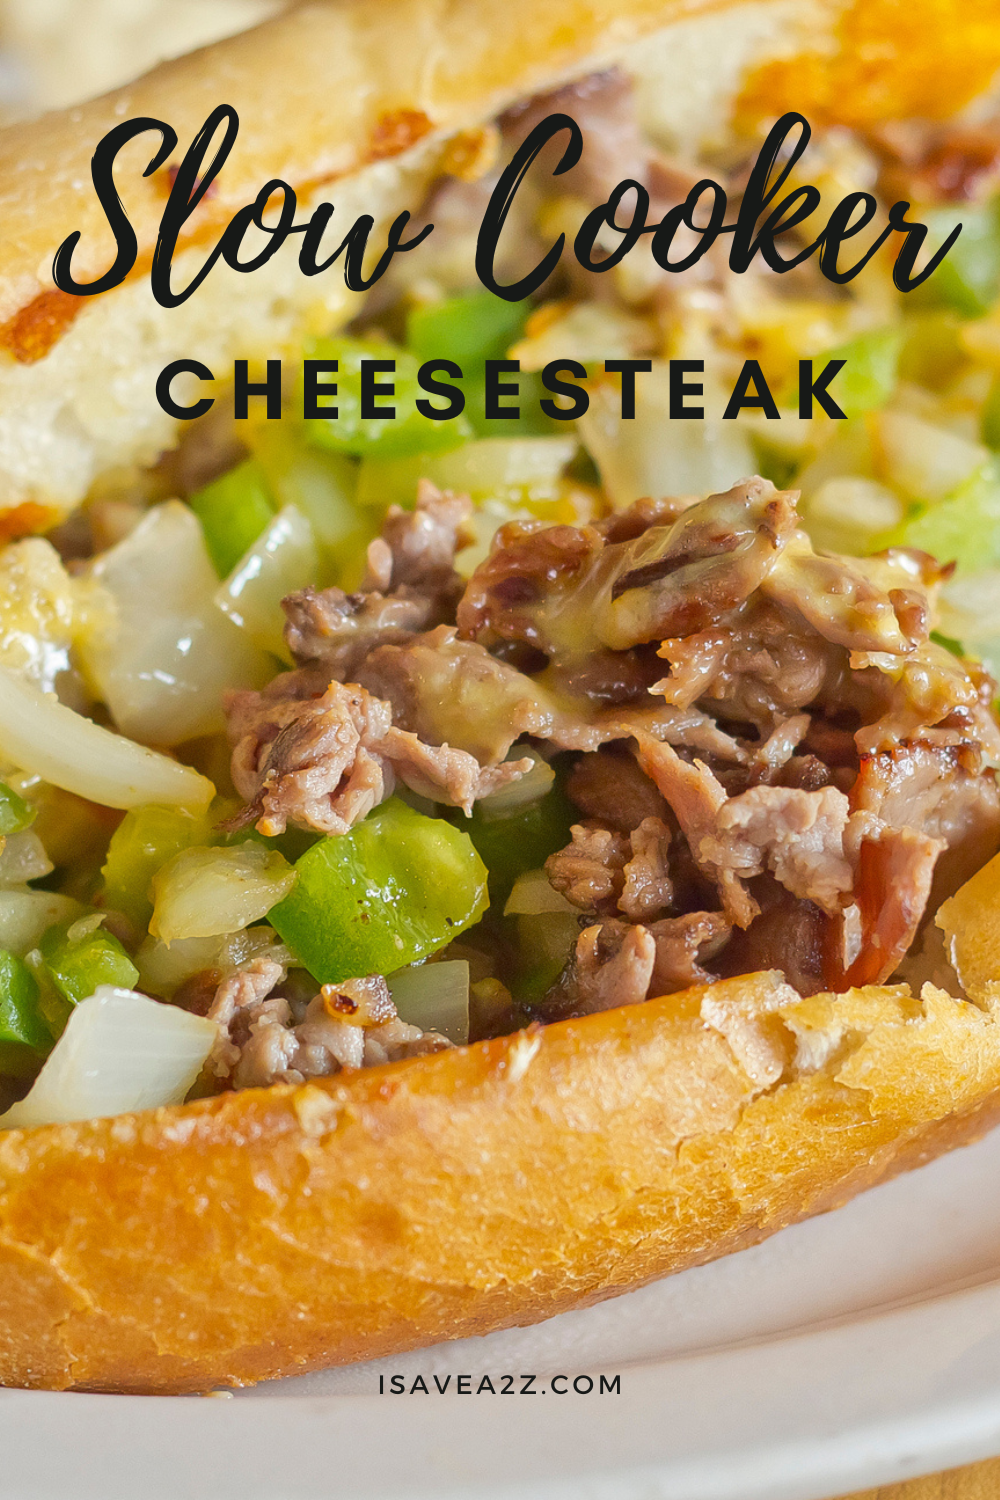 Crockpot Cheese Steak Recipe